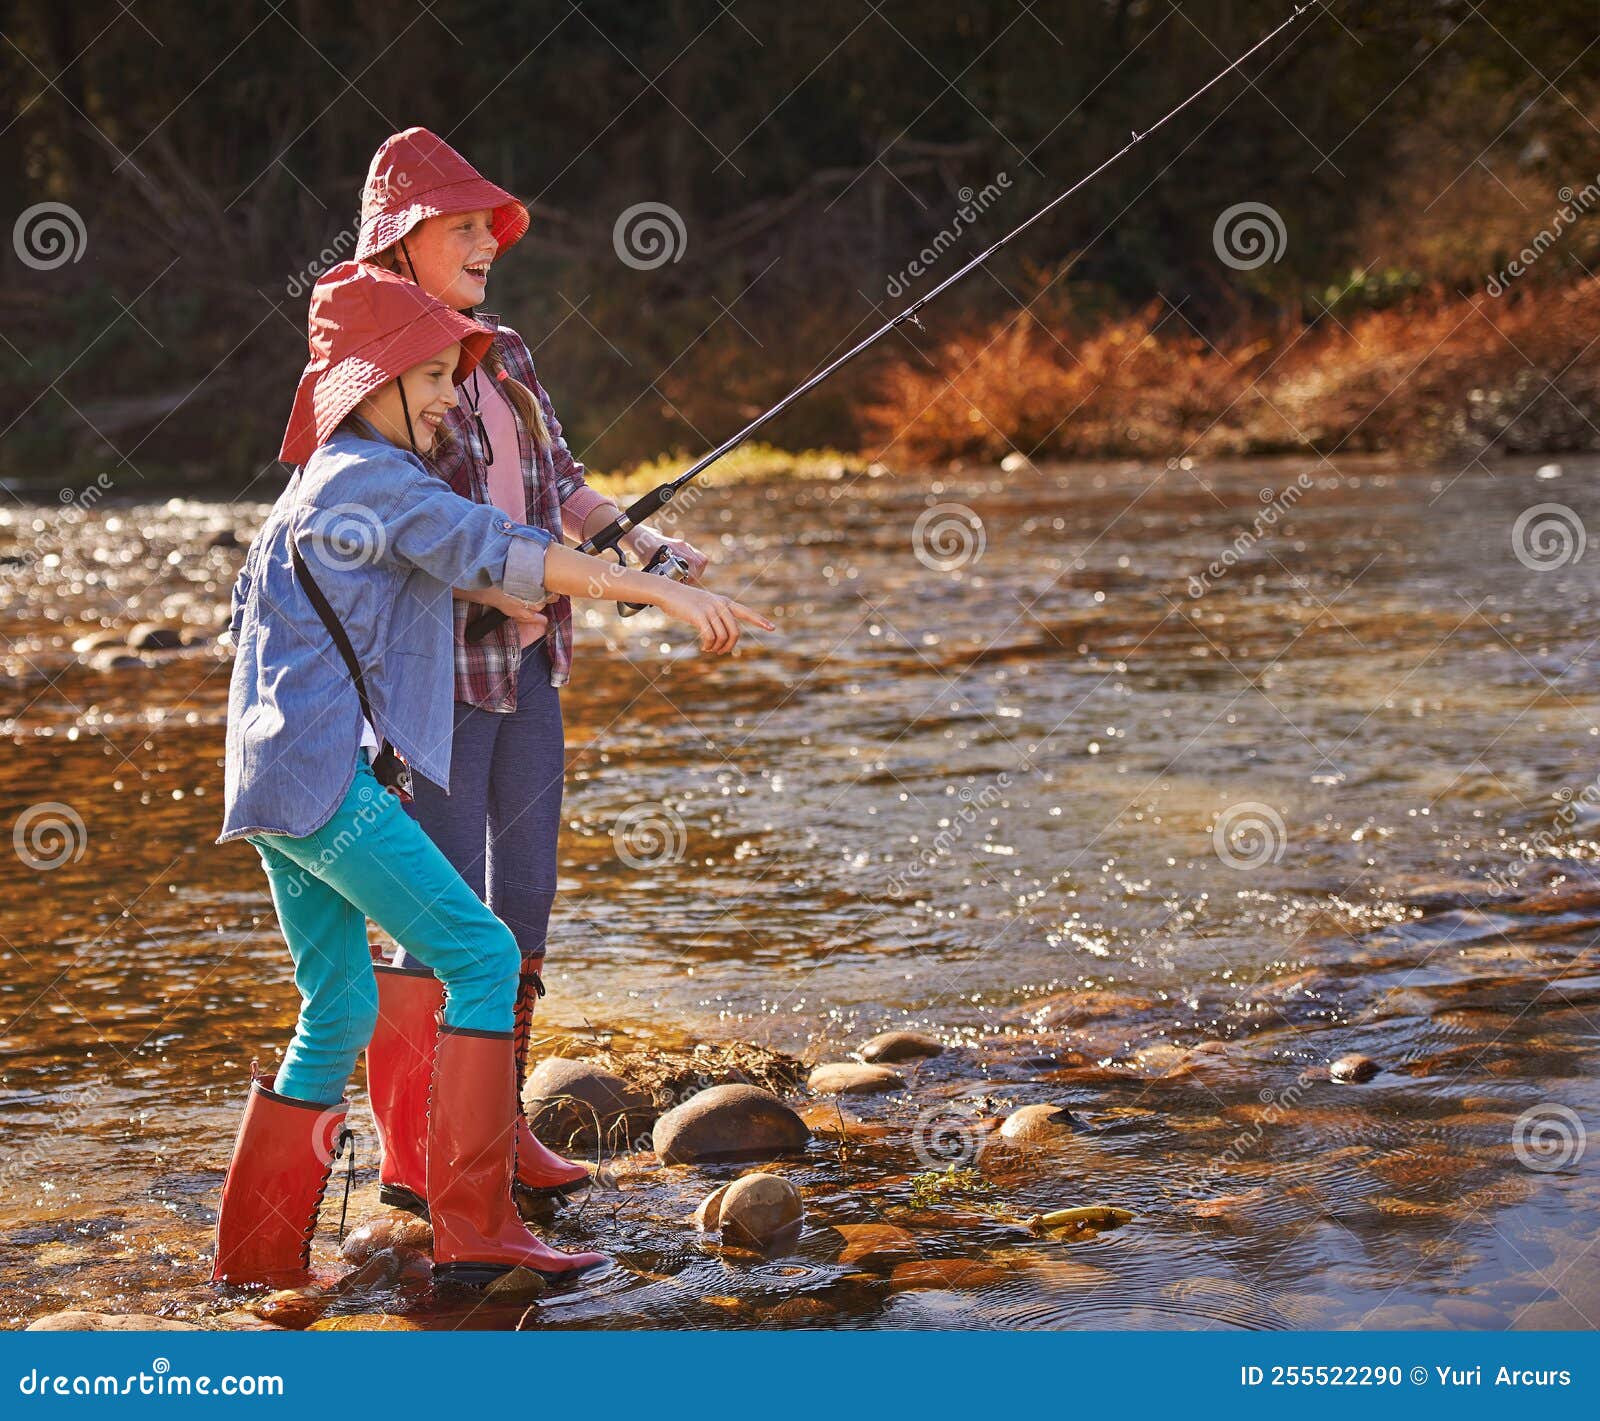 Girls Gone Fishing. Two Young Girls Fishing by a River. Stock